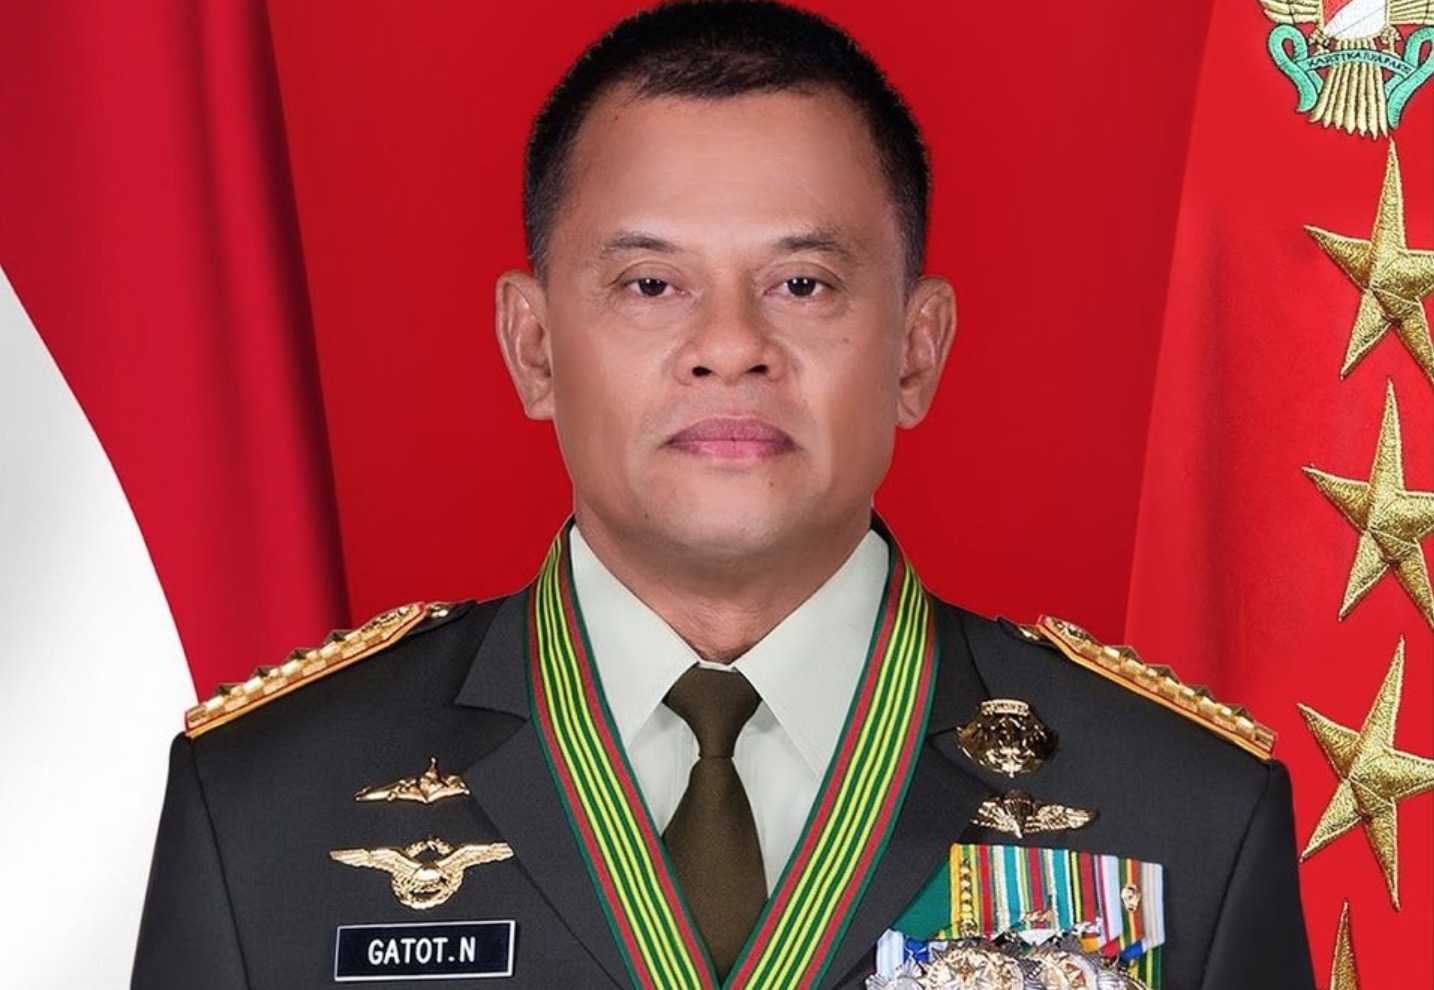 General Gatot Nurmantyo. PHOTO: Wikipedia